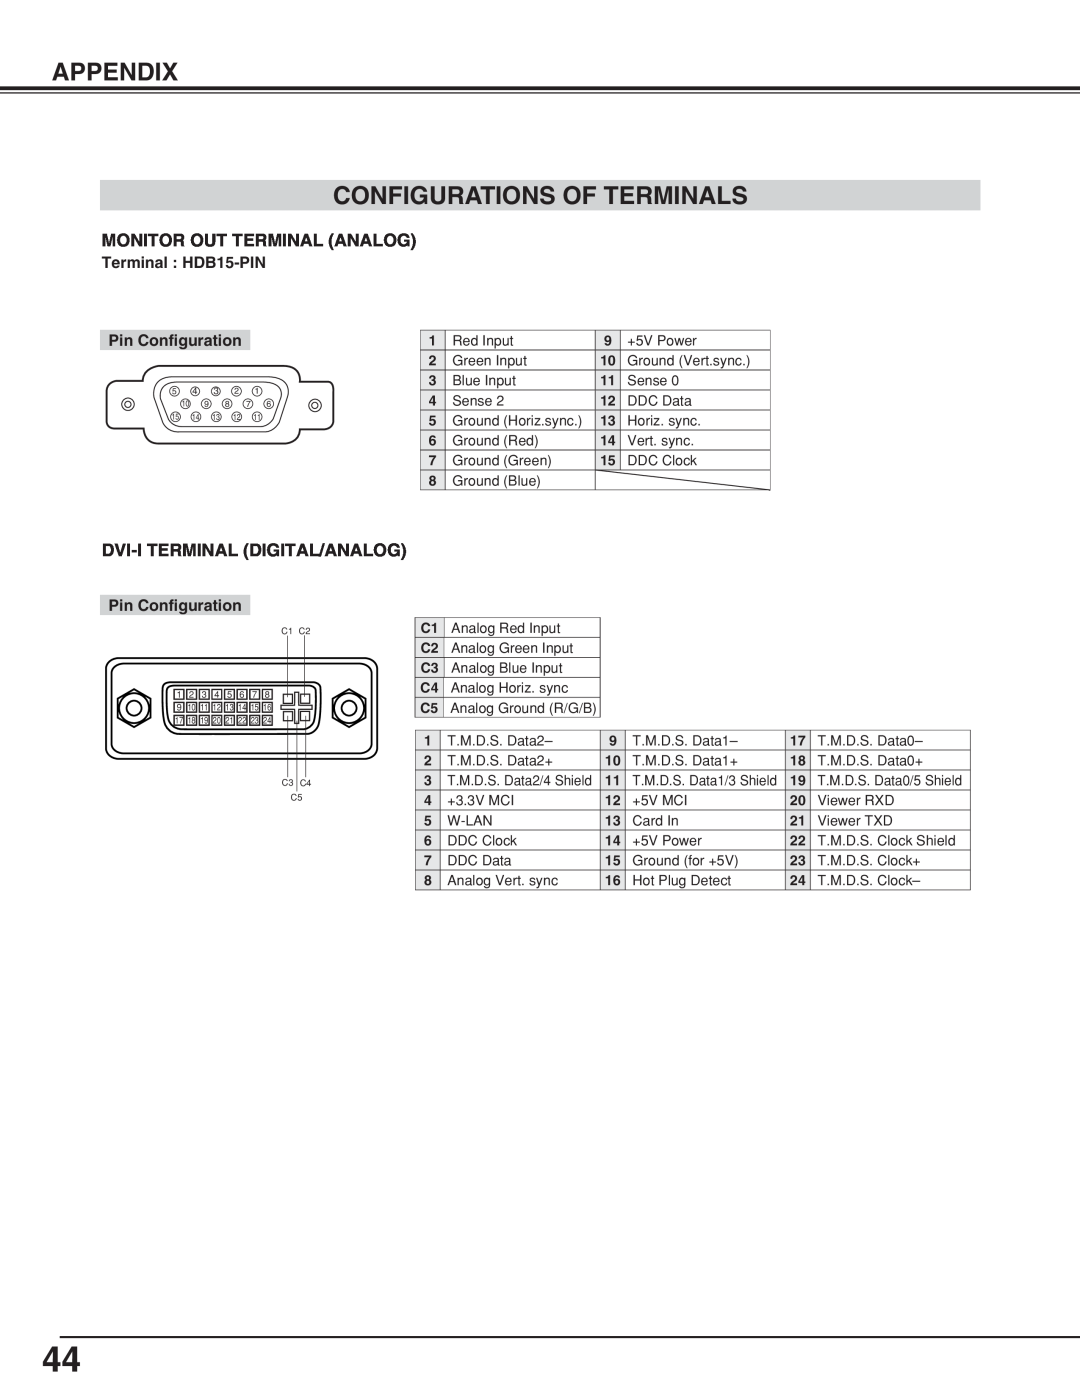 BOXLIGHT CP-19t manual Appendix Configurations Of Terminals, Monitor Out Terminal Analog, Dvi-I Terminal Digital/Analog 